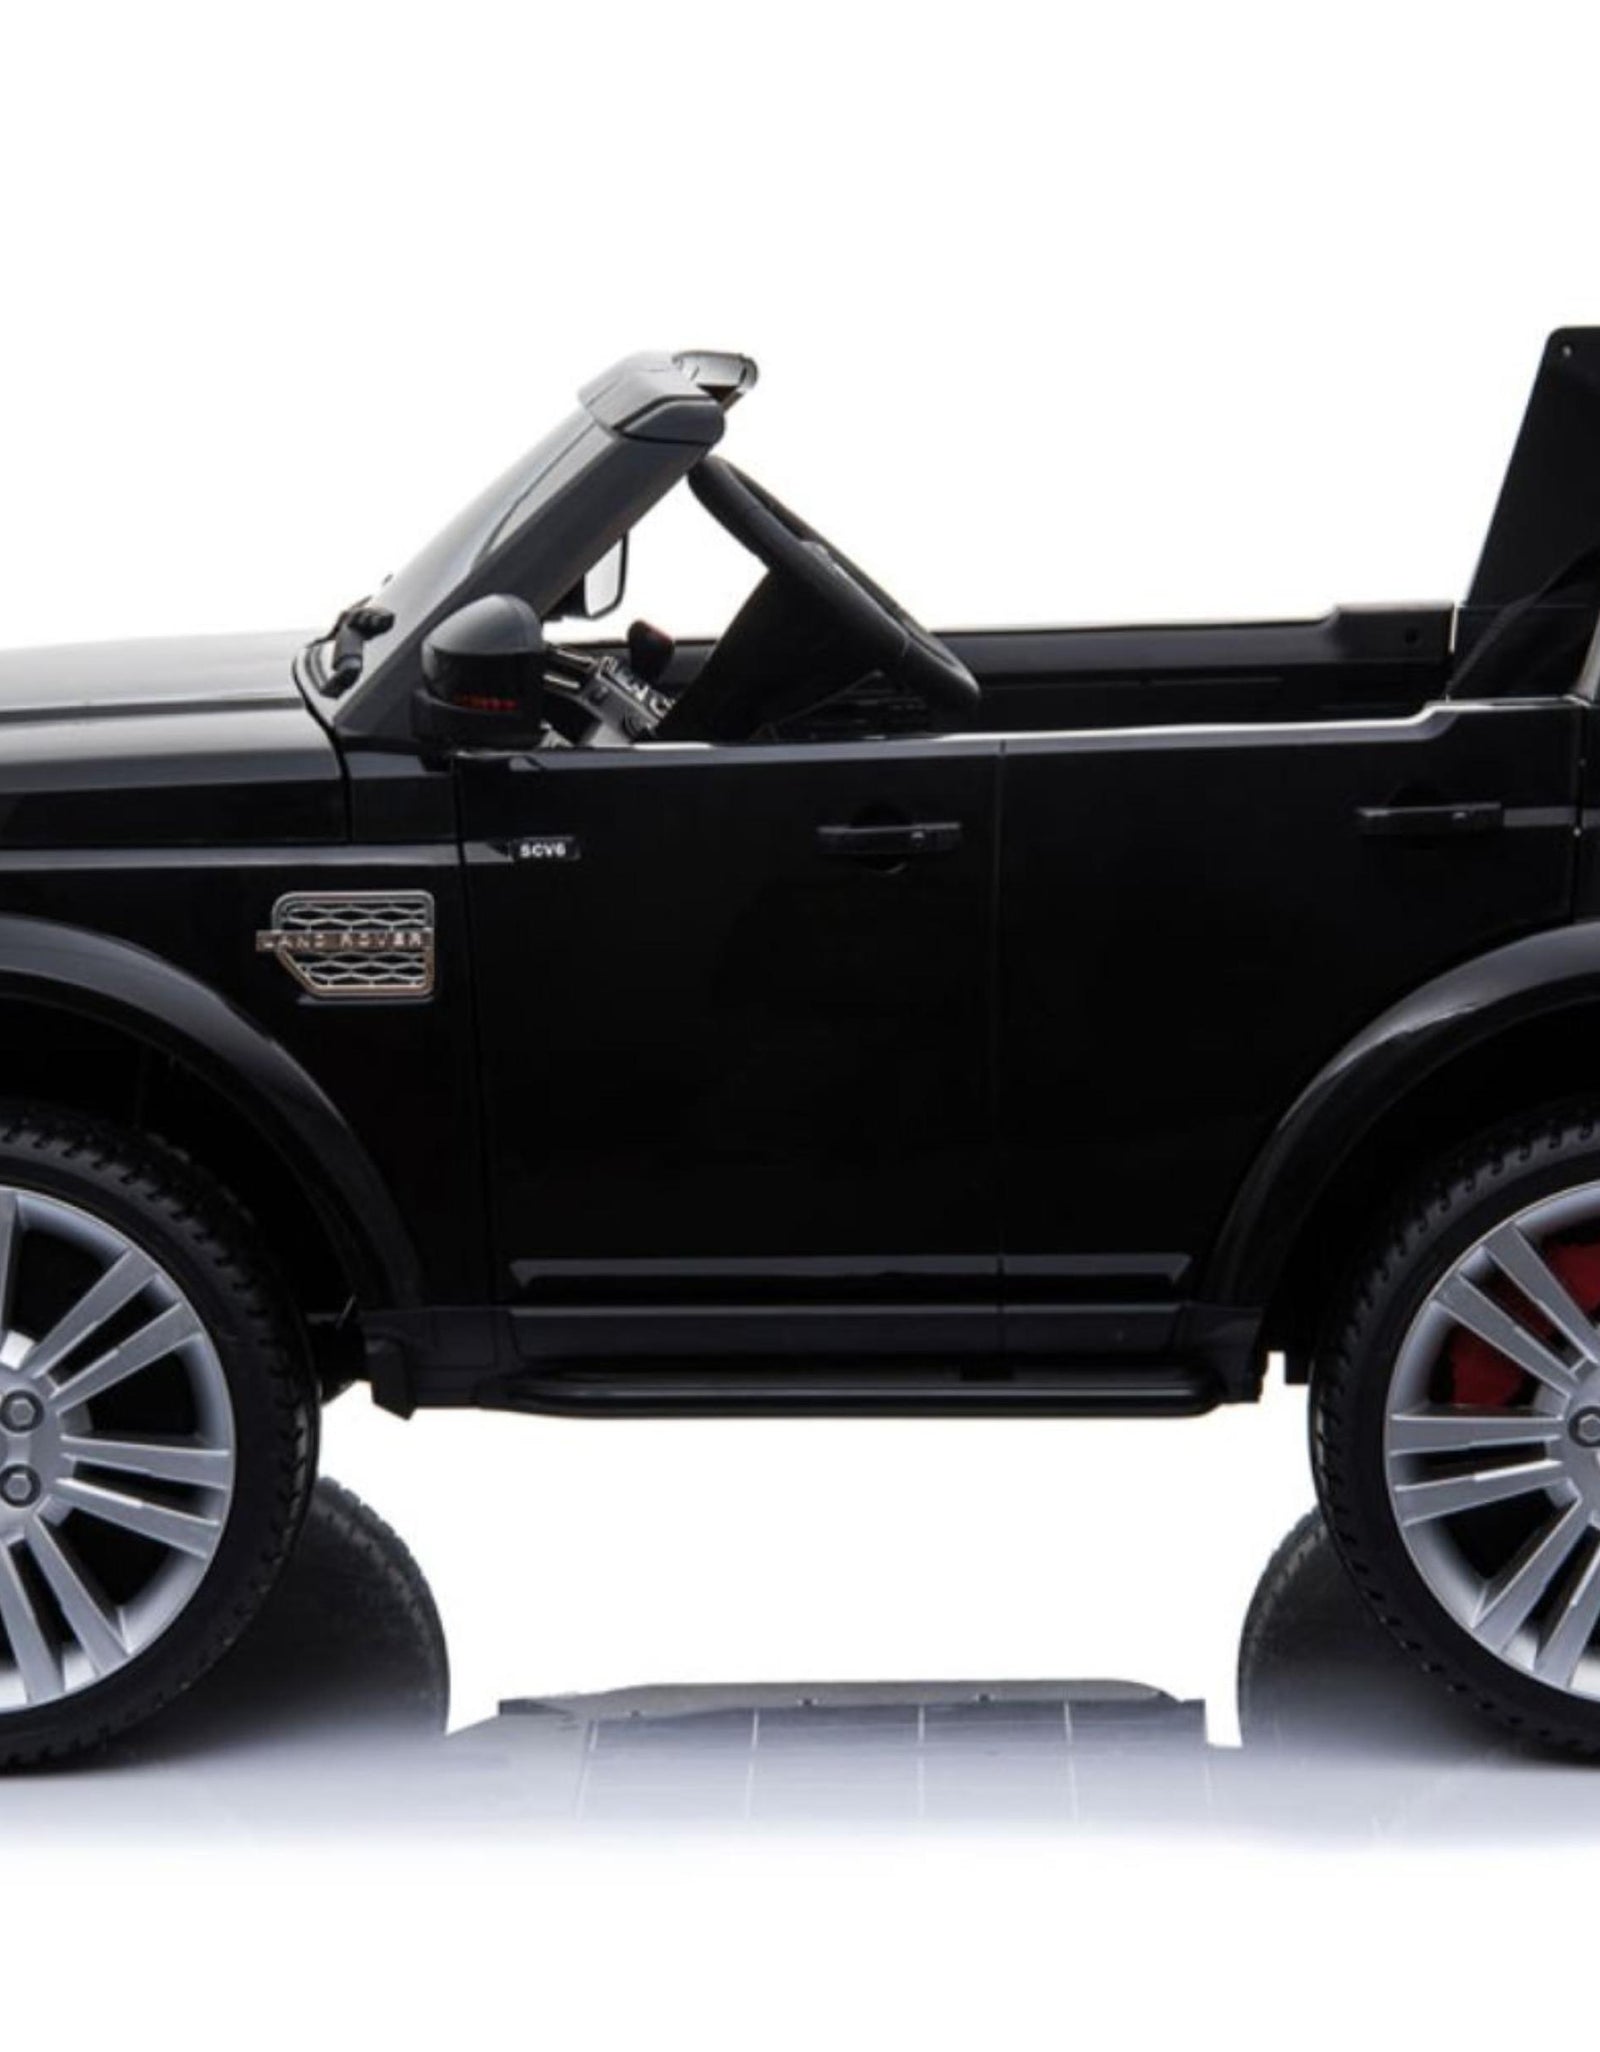 Mini Moto Land Rover Discovery 12v Black (2.4ghz Rc)